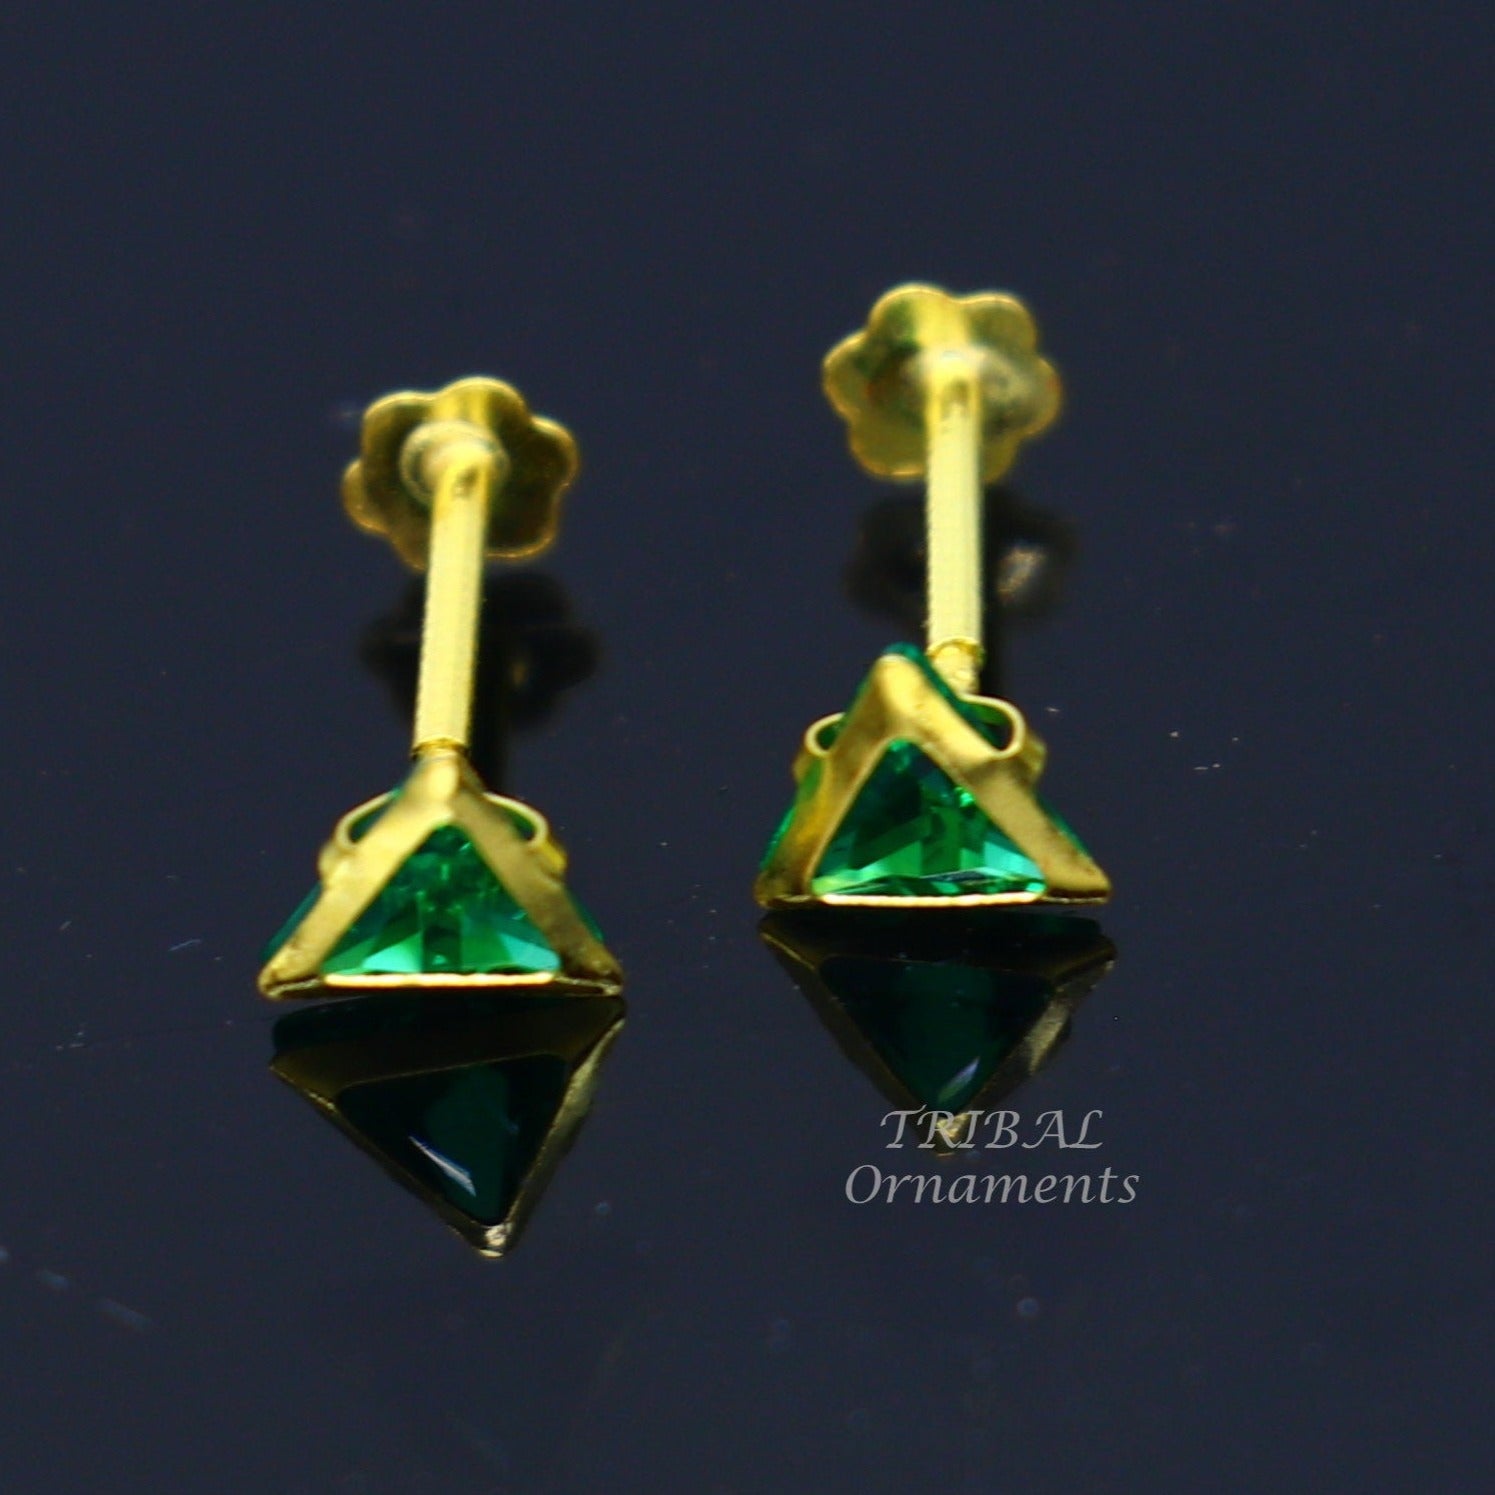 4mm 18kt yellow gold handmade single Pink stone Triangle shape stud earring  cartilage earring customized unisex screw back jewelry er153  TRIBAL  ORNAMENTS